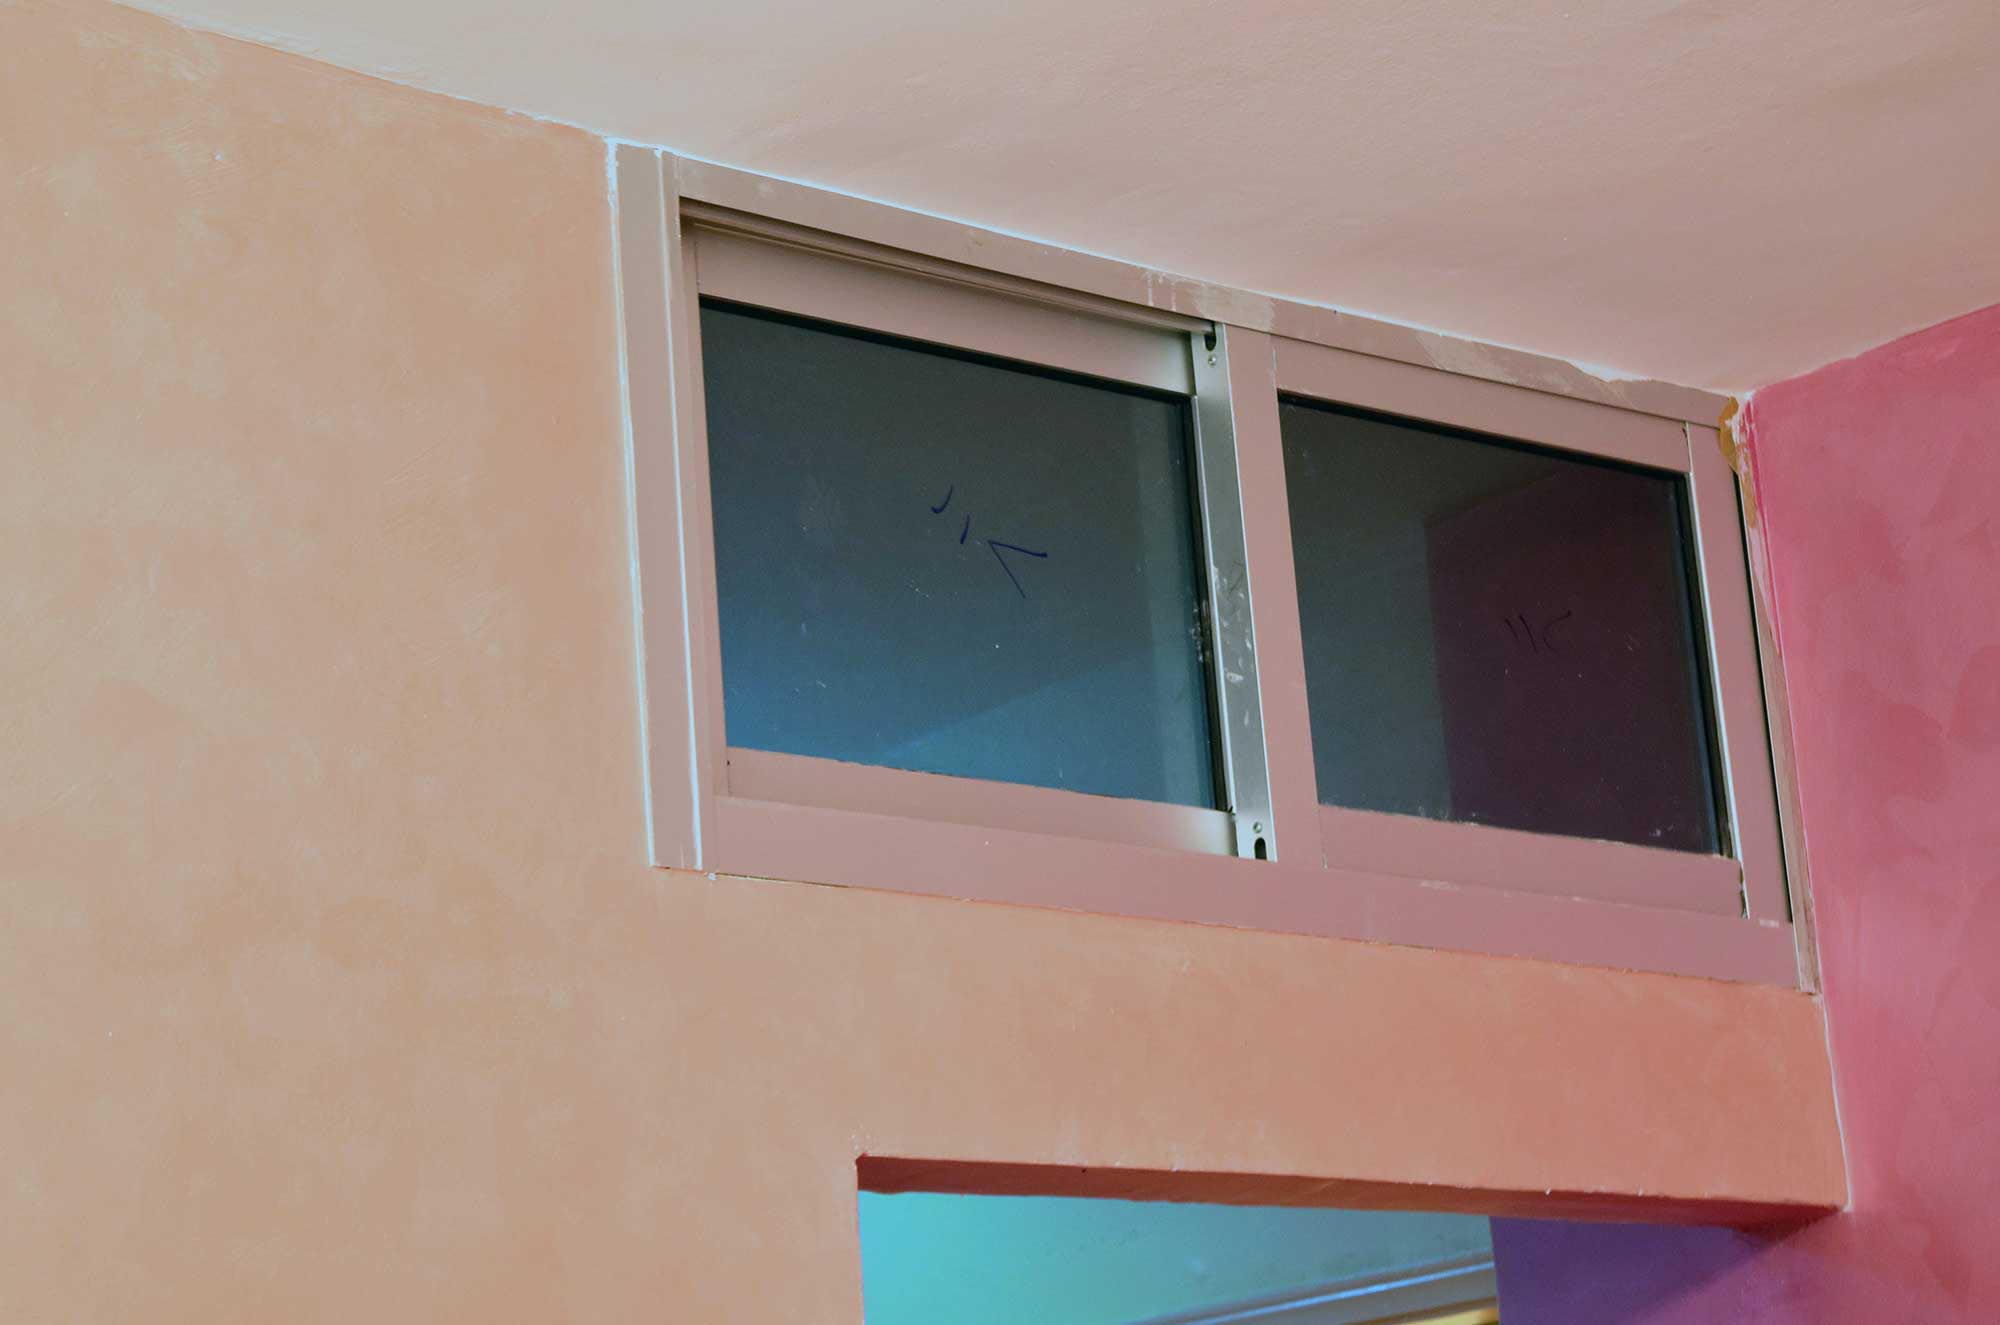 The new windows at a Lebanon preschool.